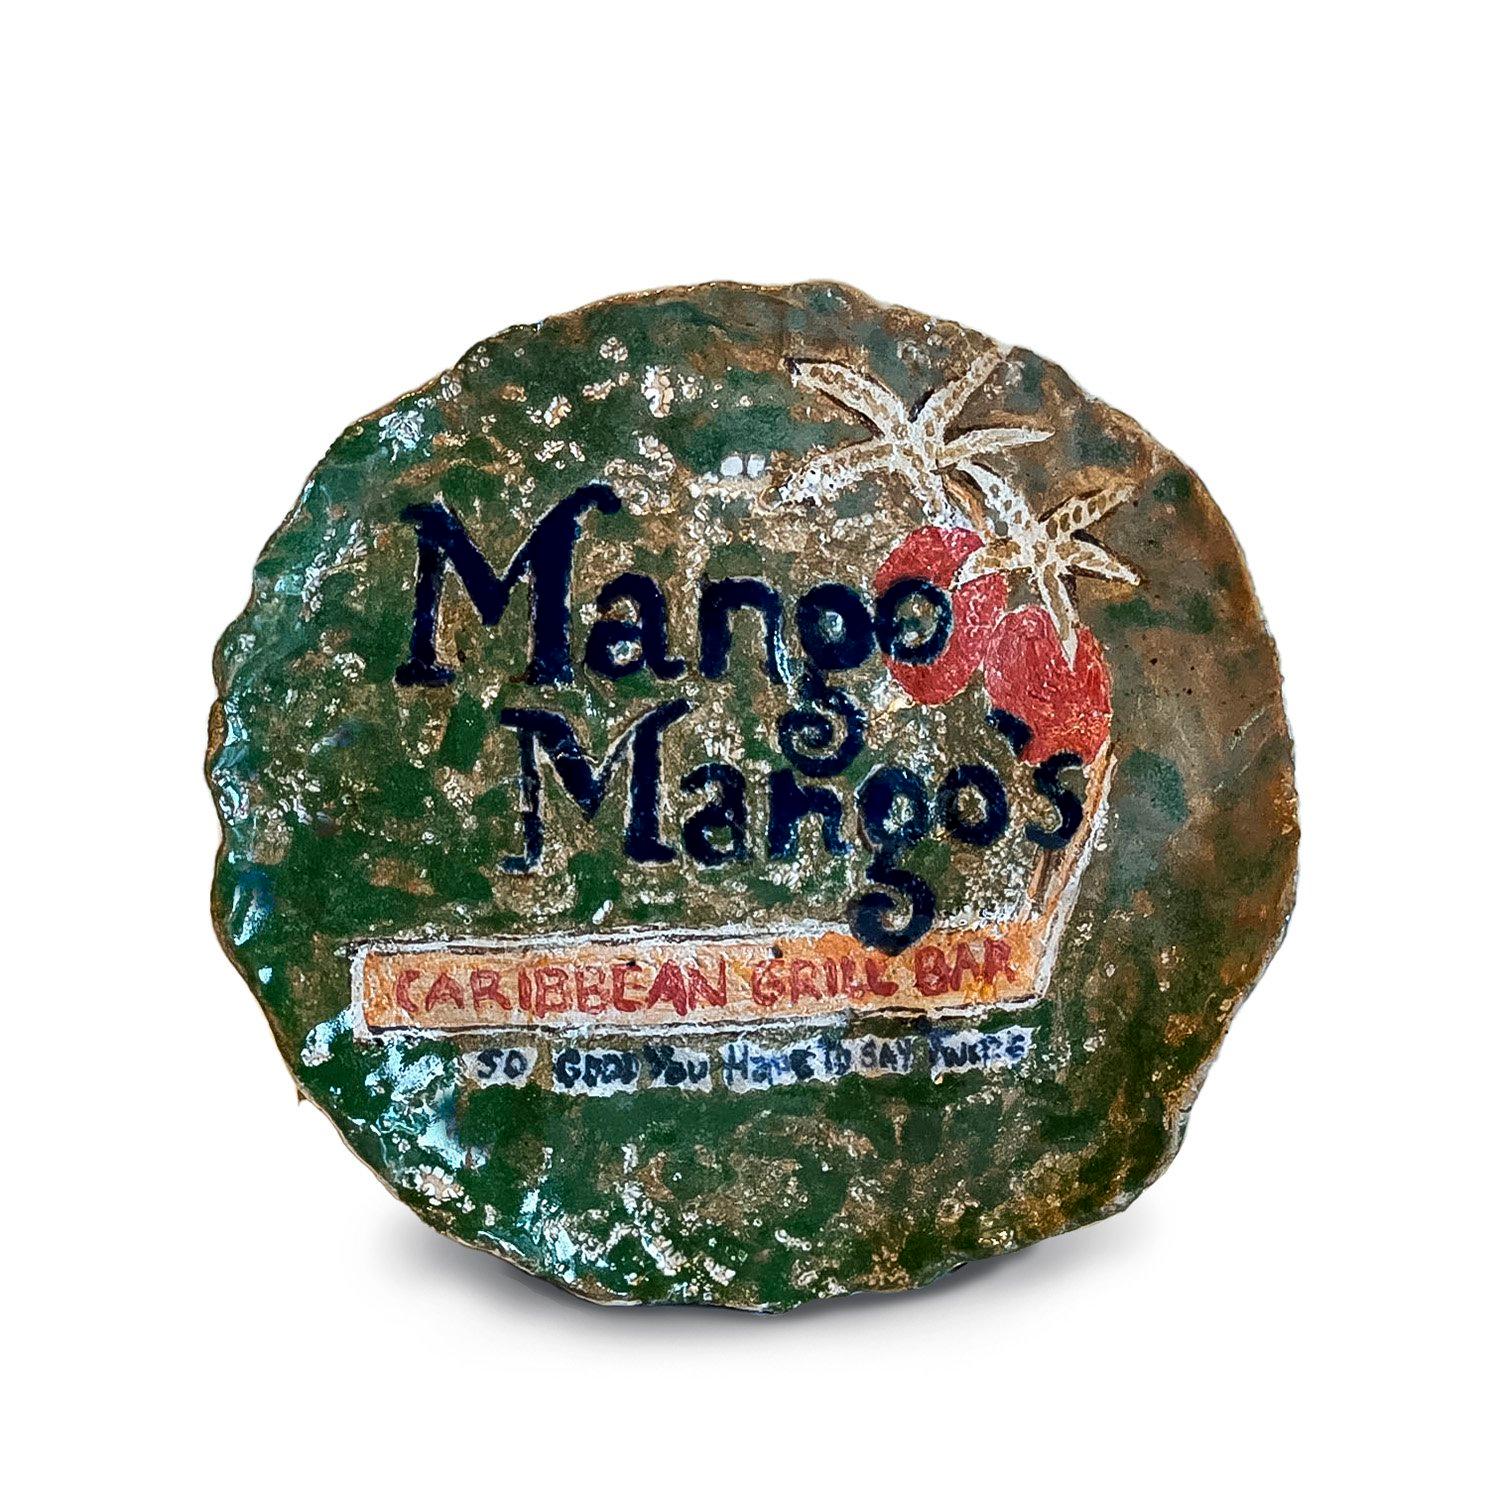 MANGO MANGO'S PLATE (INV# NP3570)
Magdalena Suarez Frimkess
stoneware and glaze
6” x 6”
2012
signed by artist
Rare!